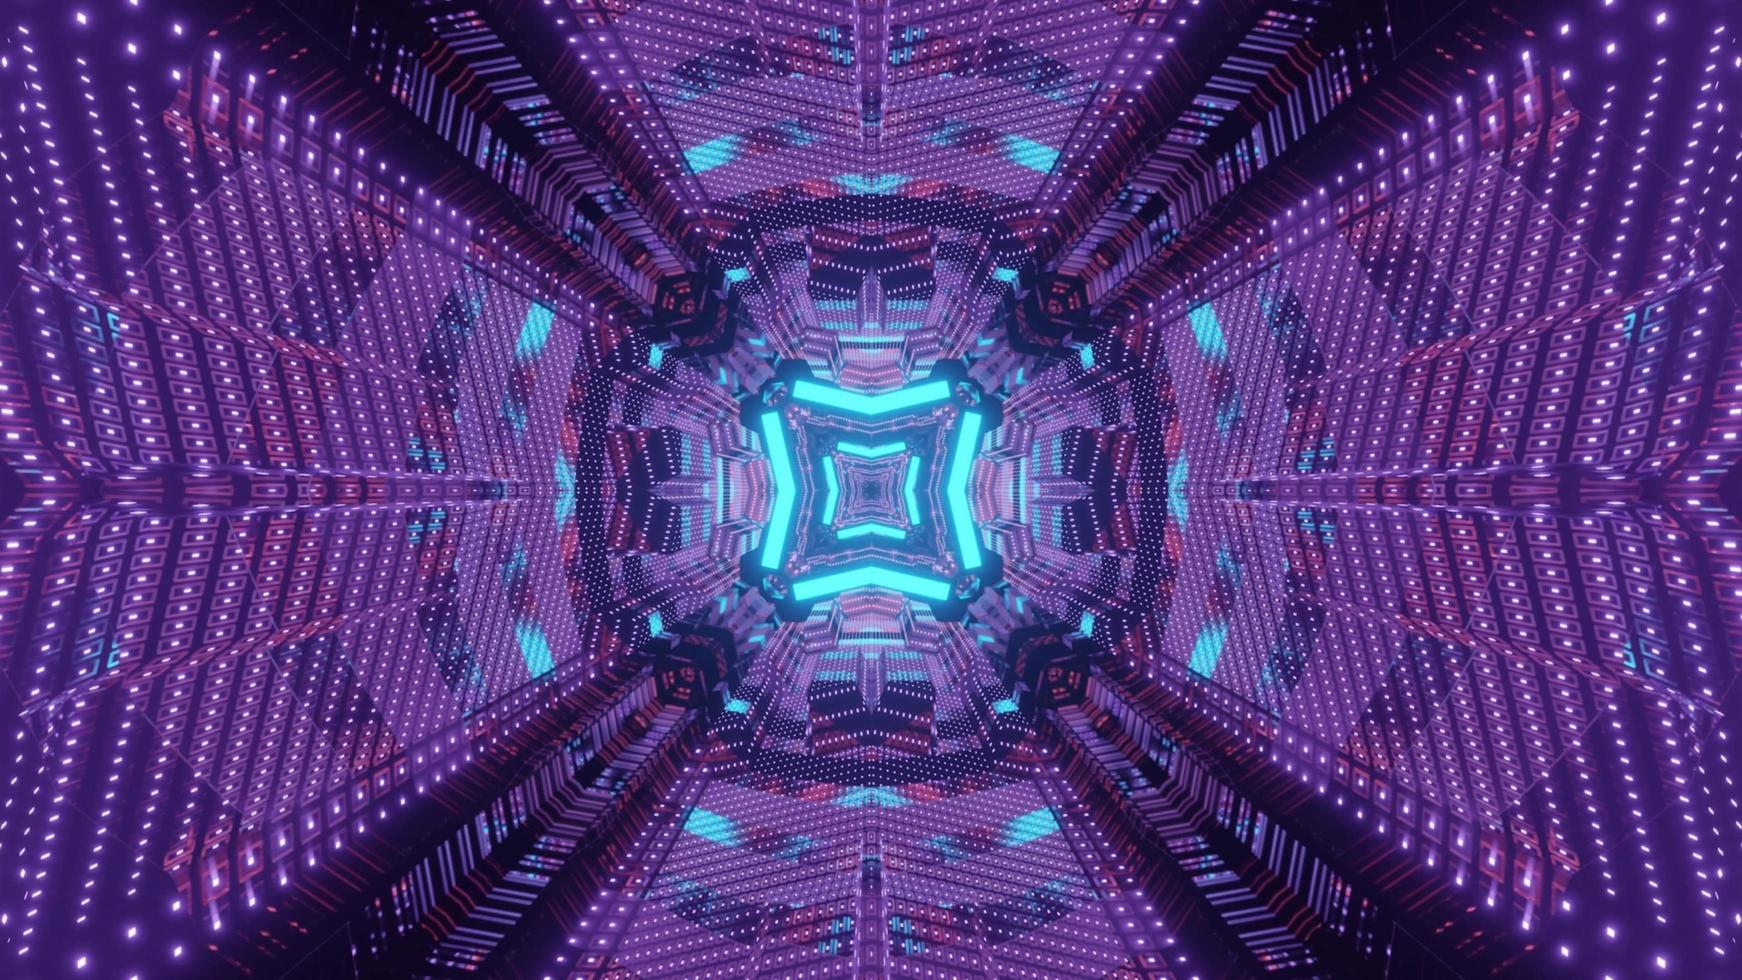 túnel sci fi com ilustração 3d geométrica de néon foto